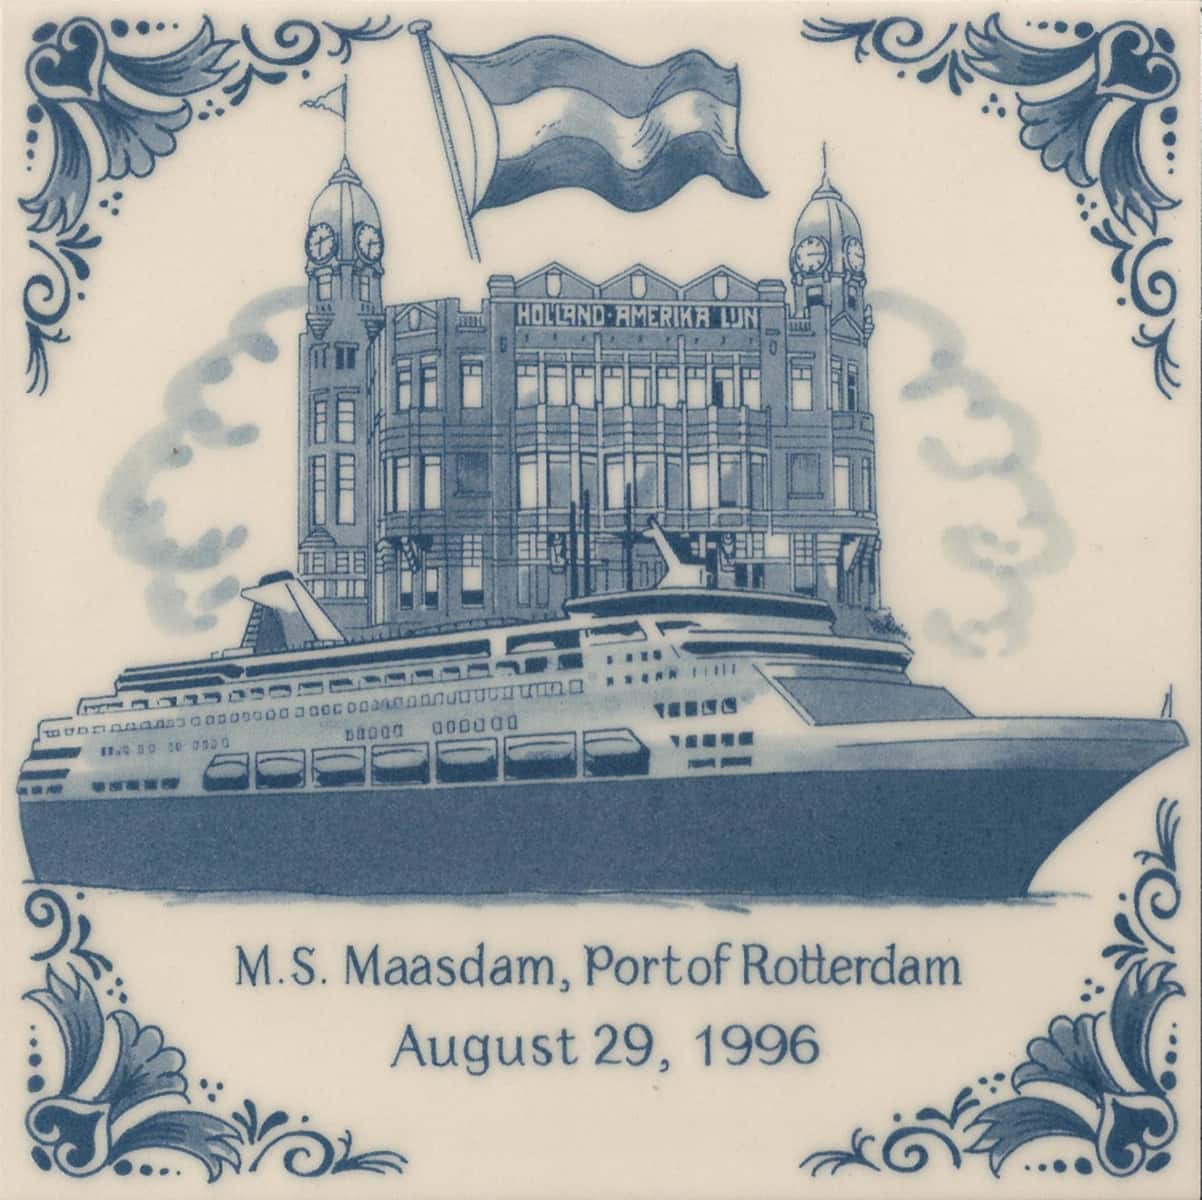 Maasdam, Port of Rotterdam commemorative tile, Holland America Line, August 29, 1996